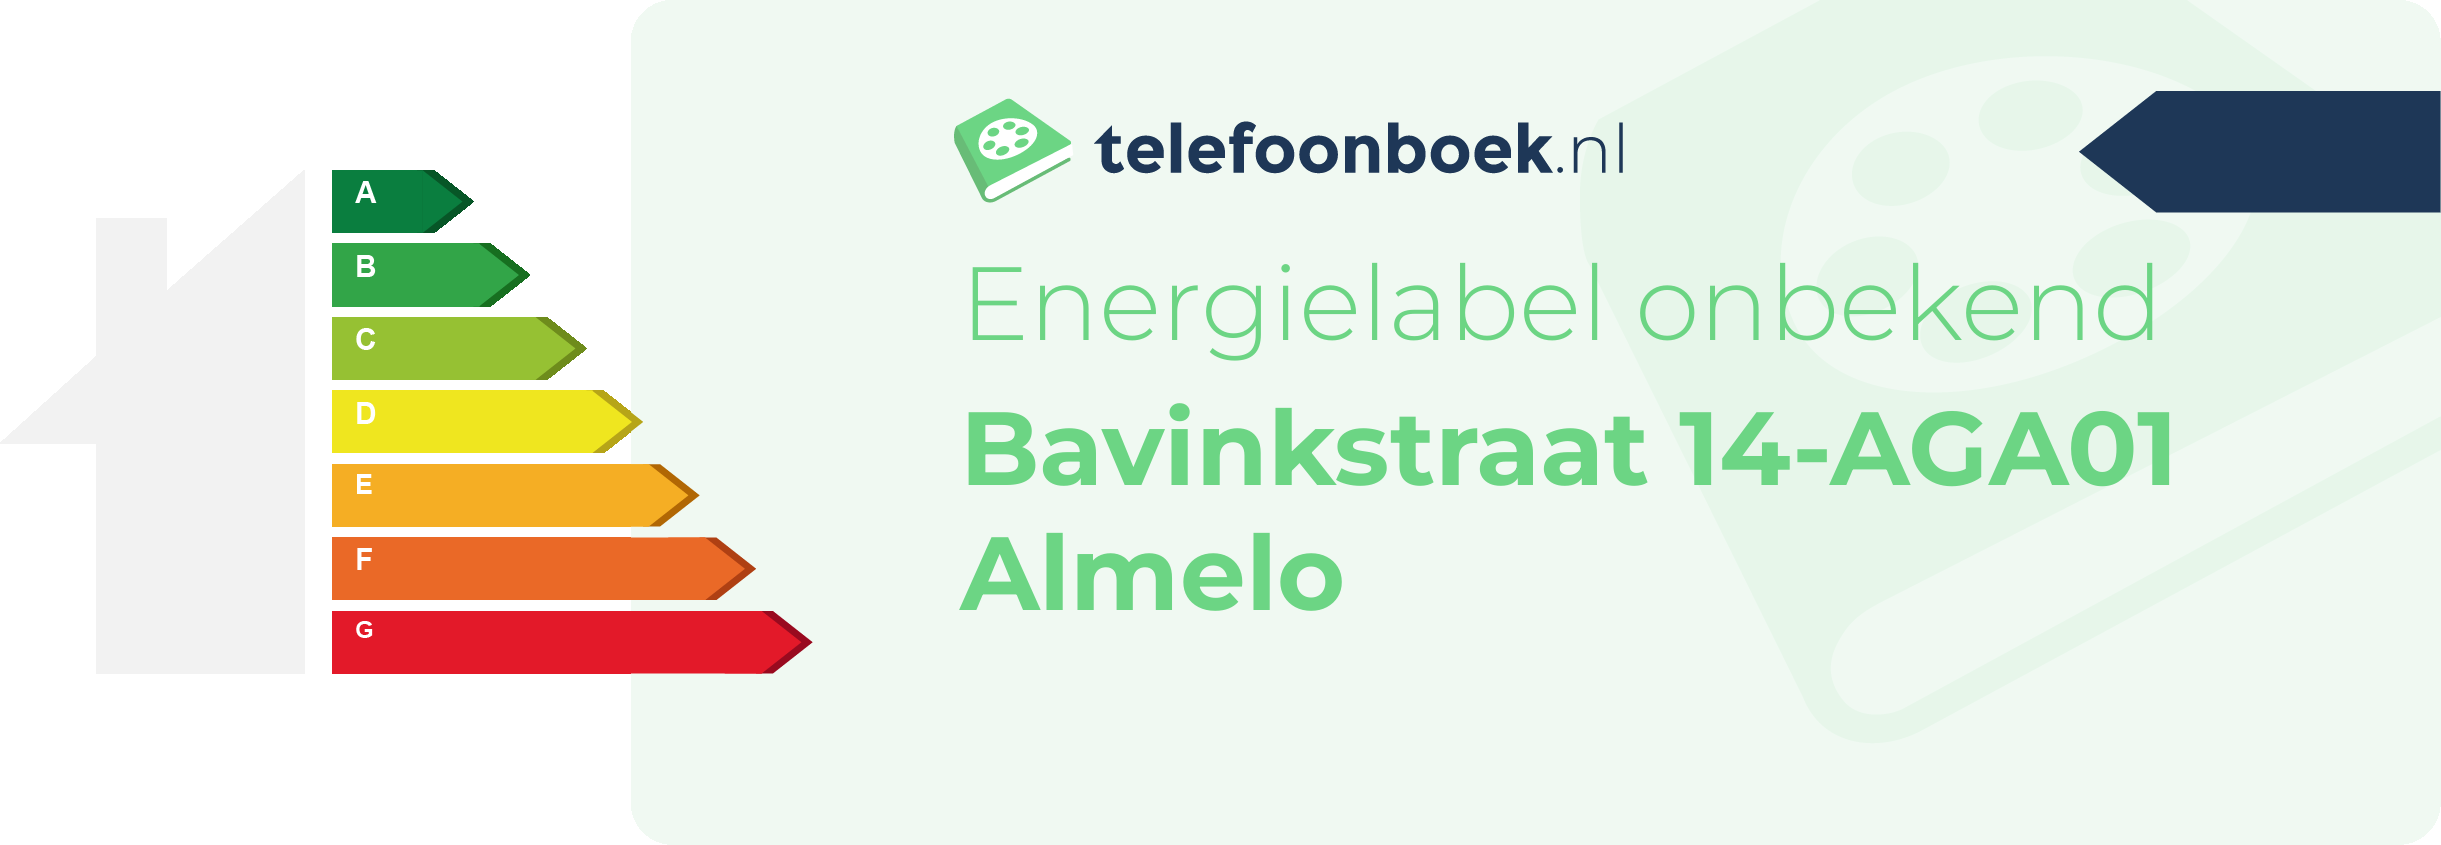 Energielabel Bavinkstraat 14-AGA01 Almelo